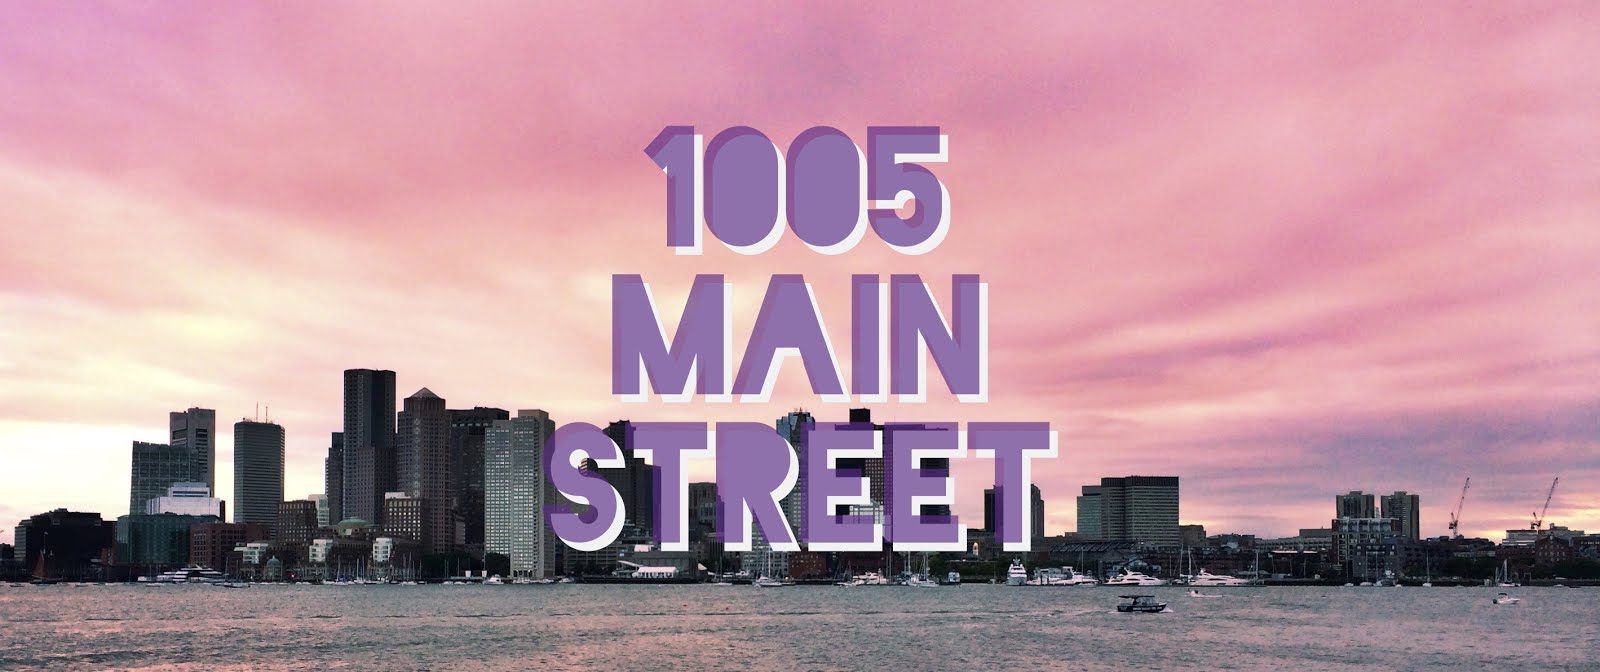 1005 main street 